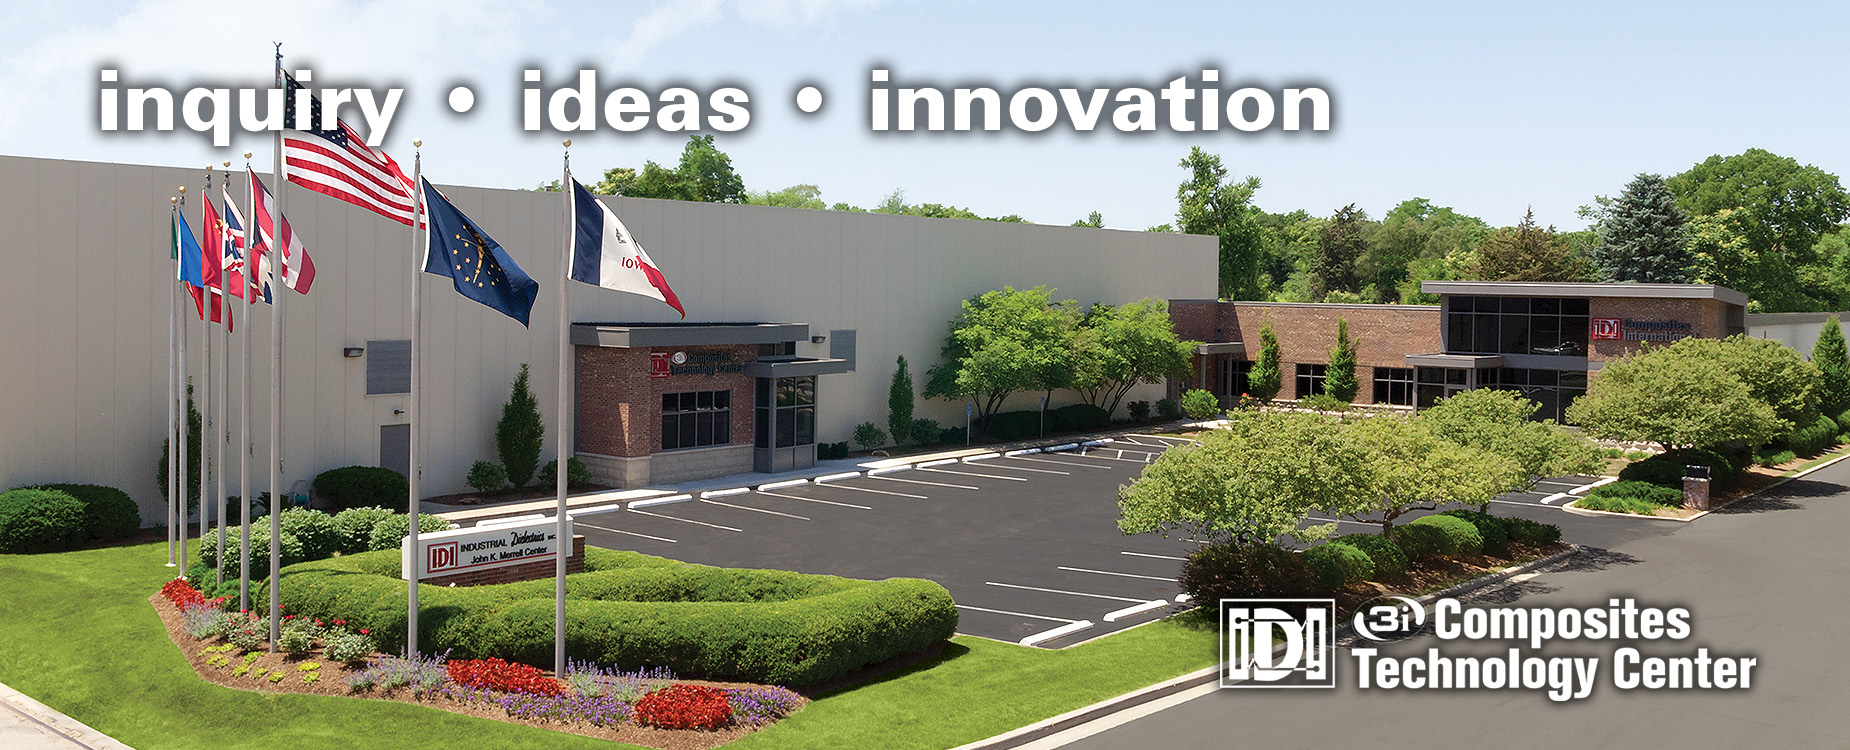 IDI 3i Composites Technology Center